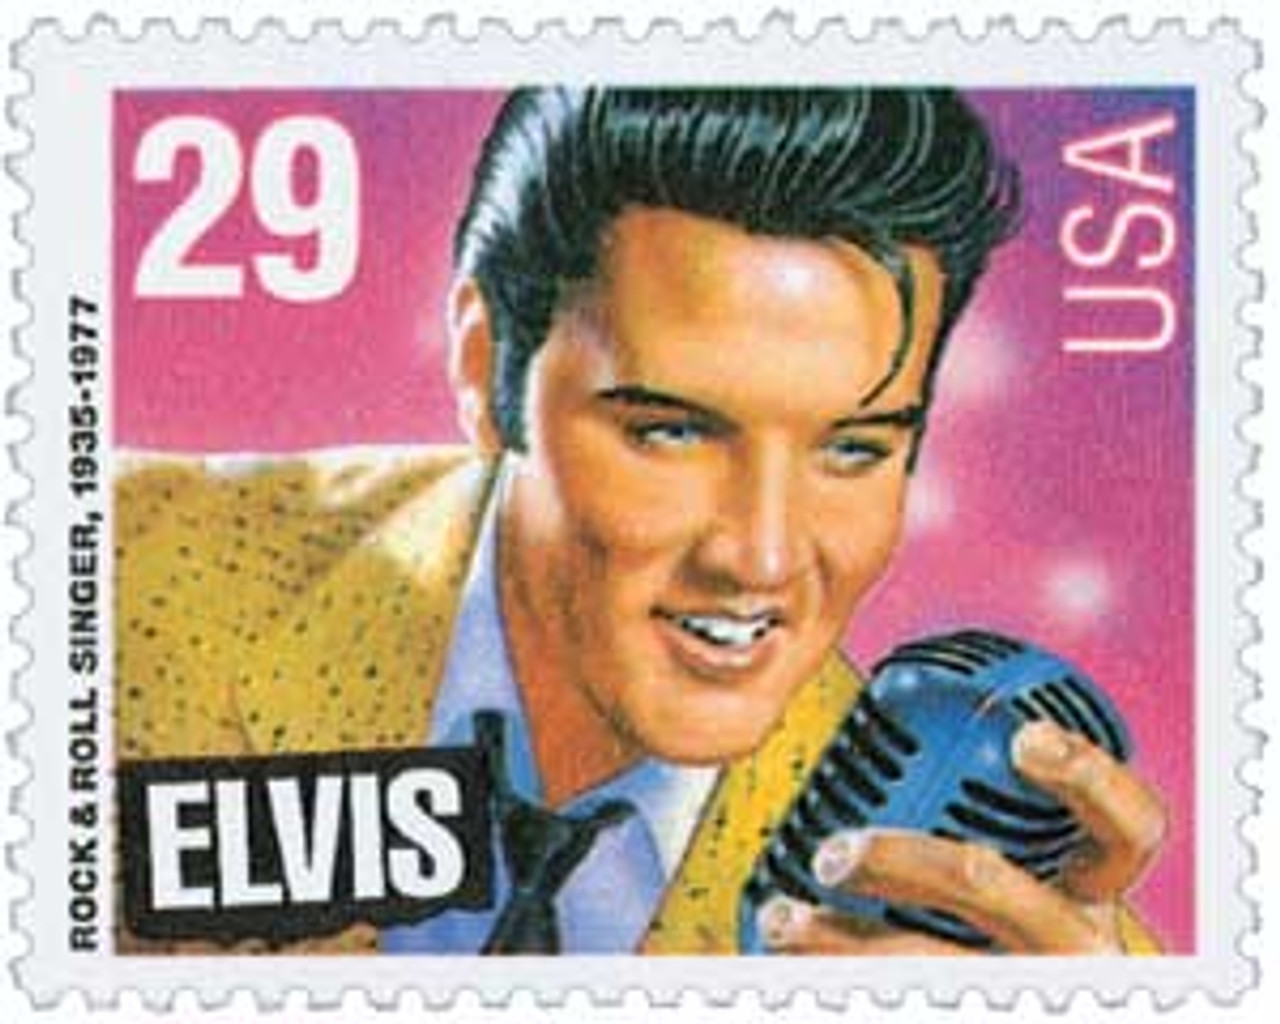 2721 - 1993 29c Legends of American Music: Elvis Presley - Mystic Stamp Company